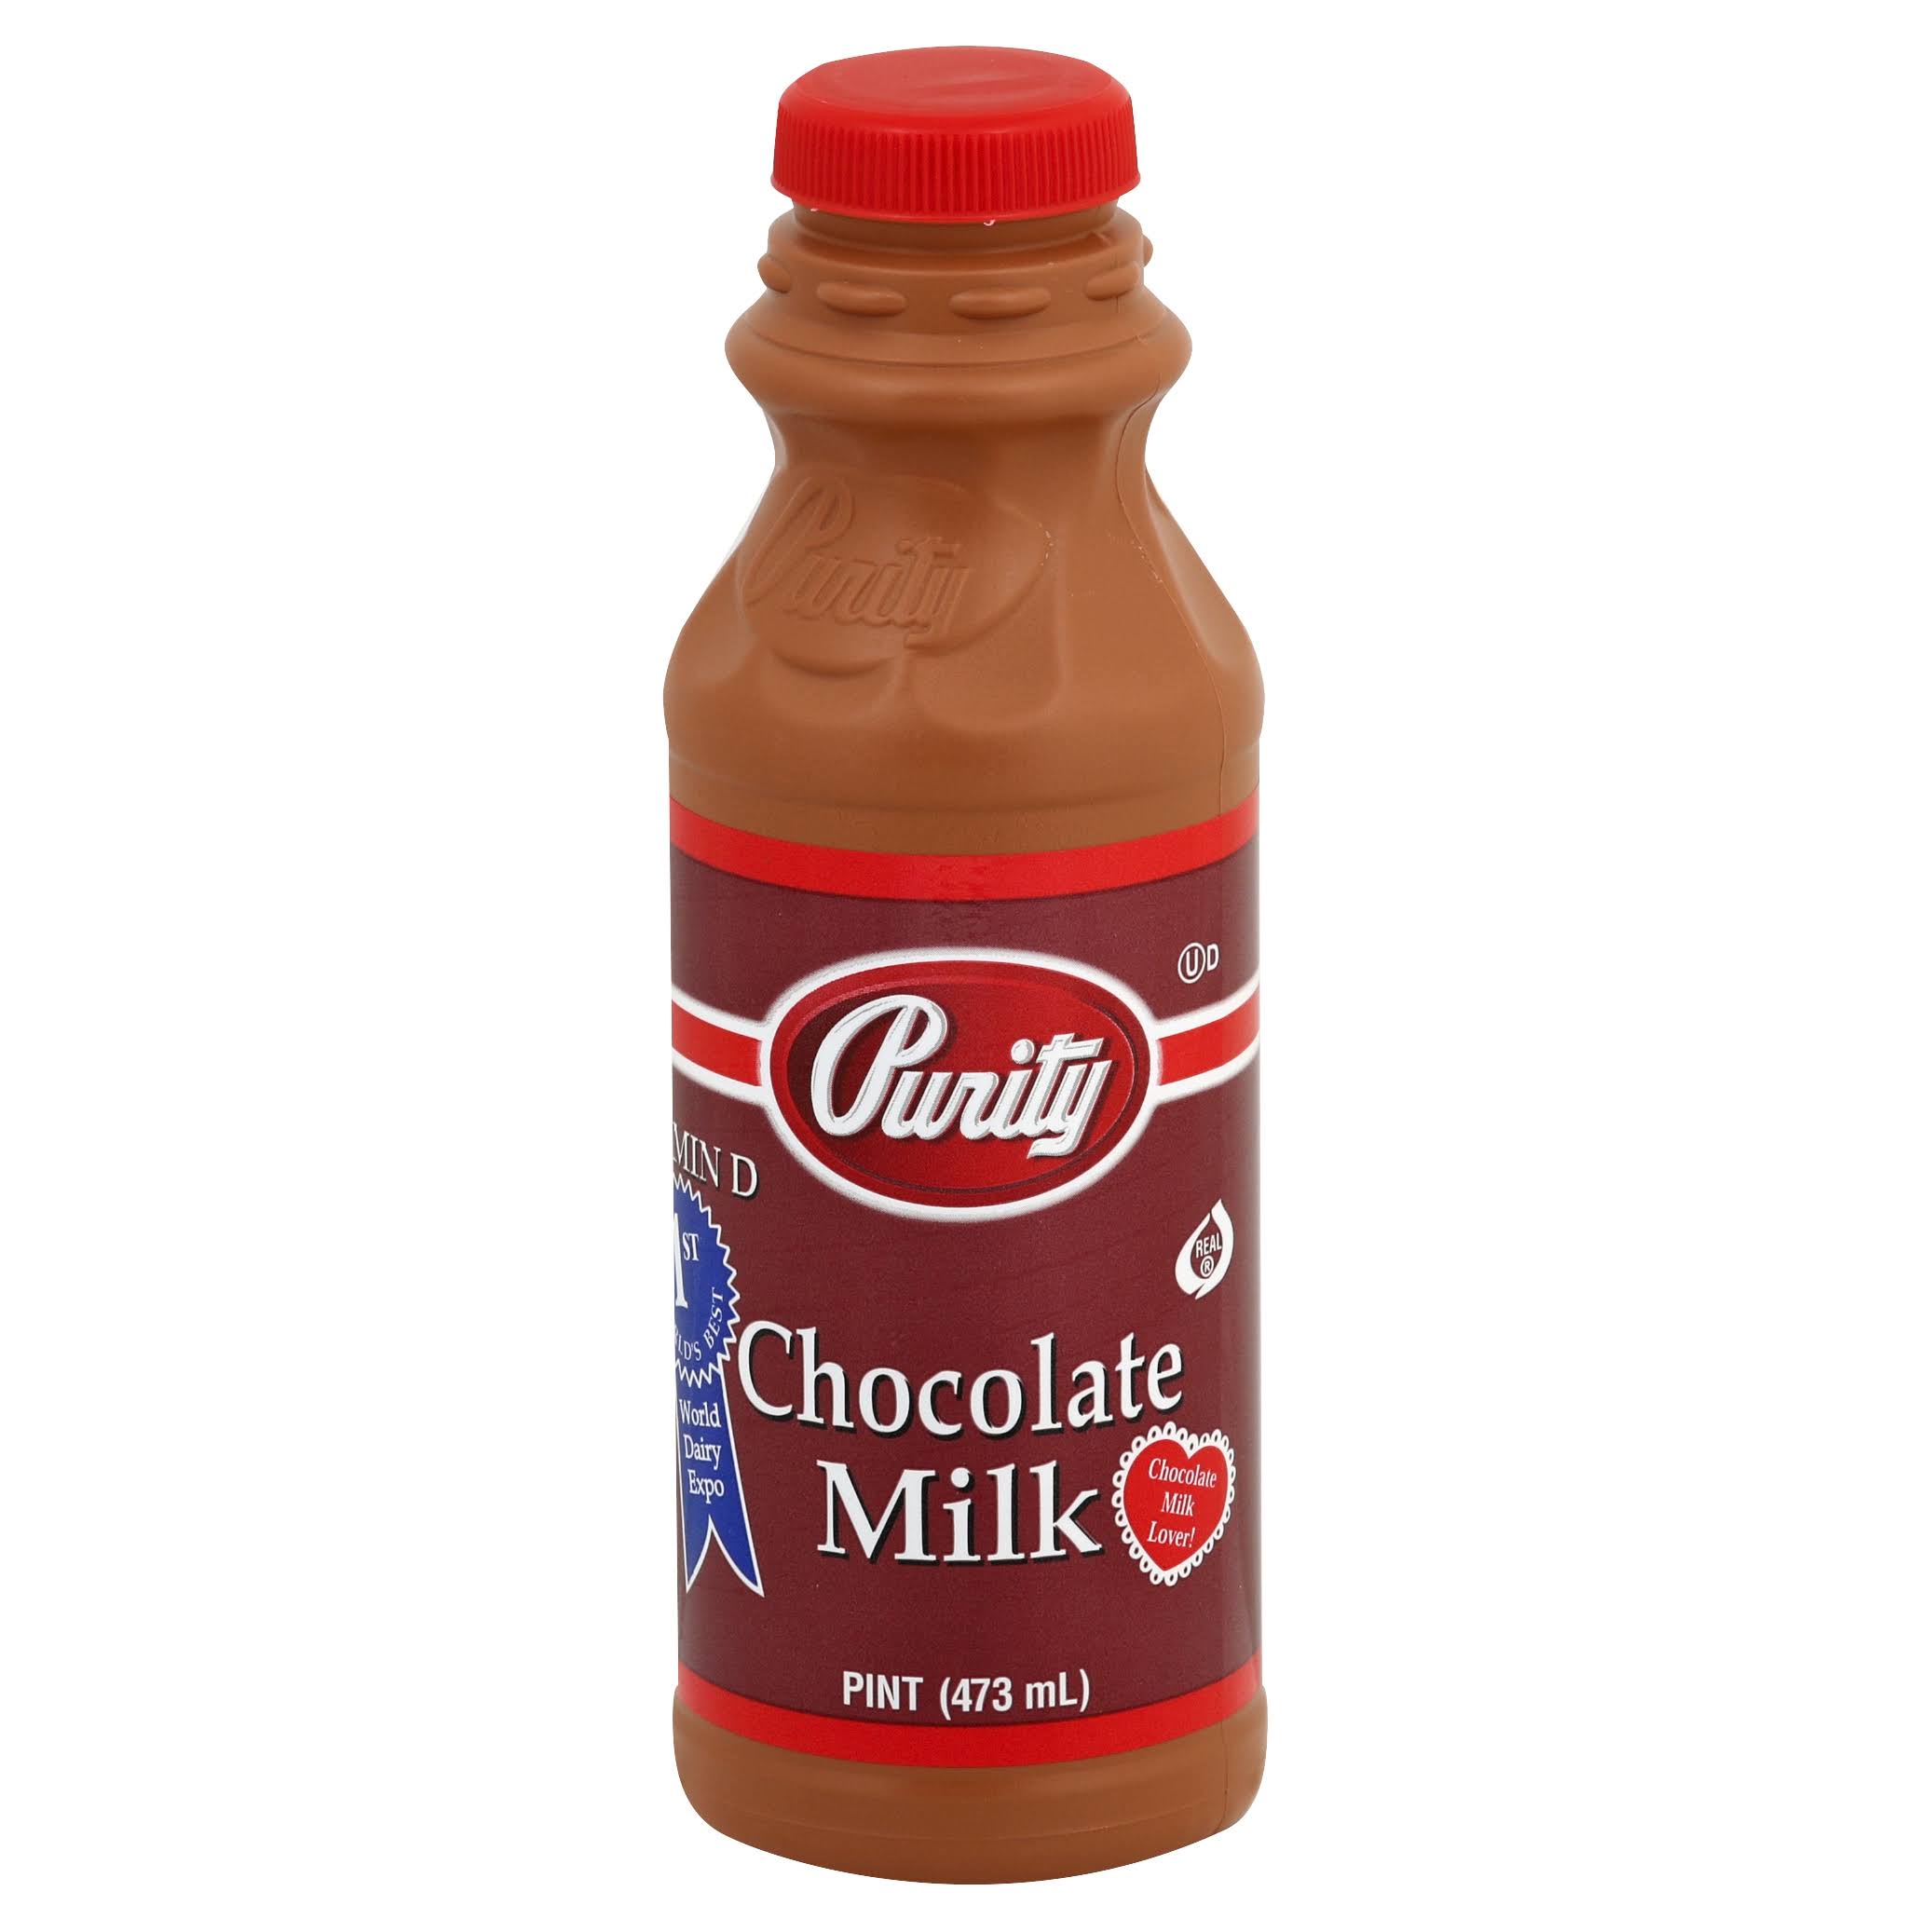 Purity Chocolate Milk - 473ml